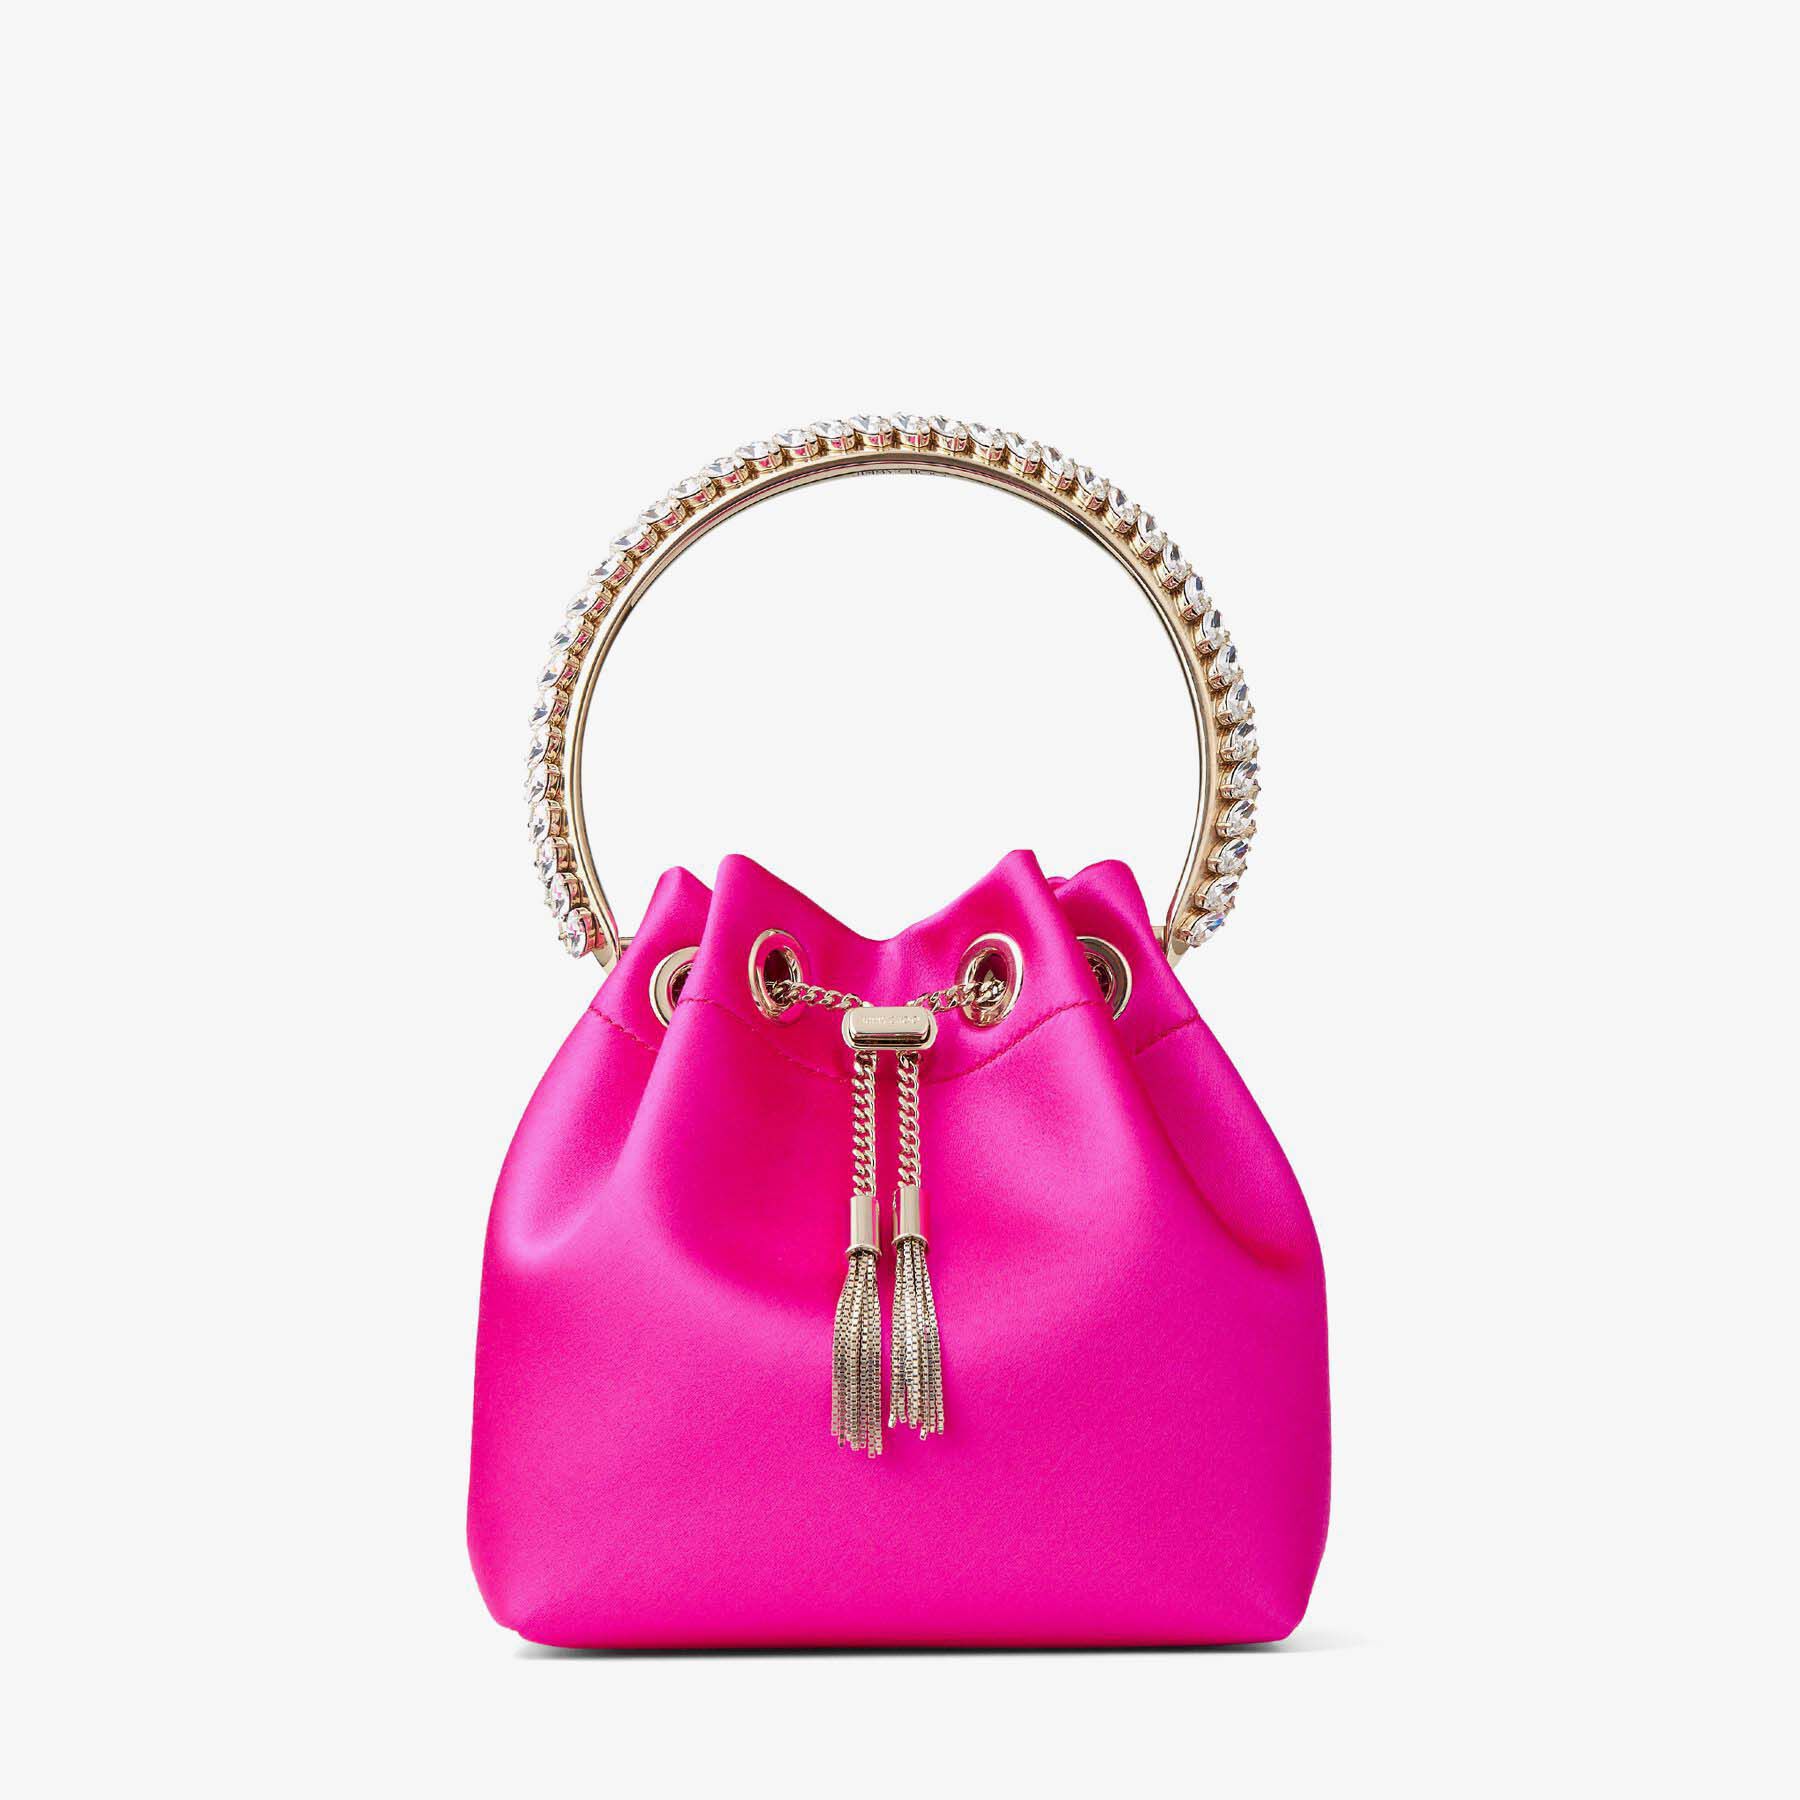 Fuchsia pink clutch bag, unique accessory, bright pink bridesmaid